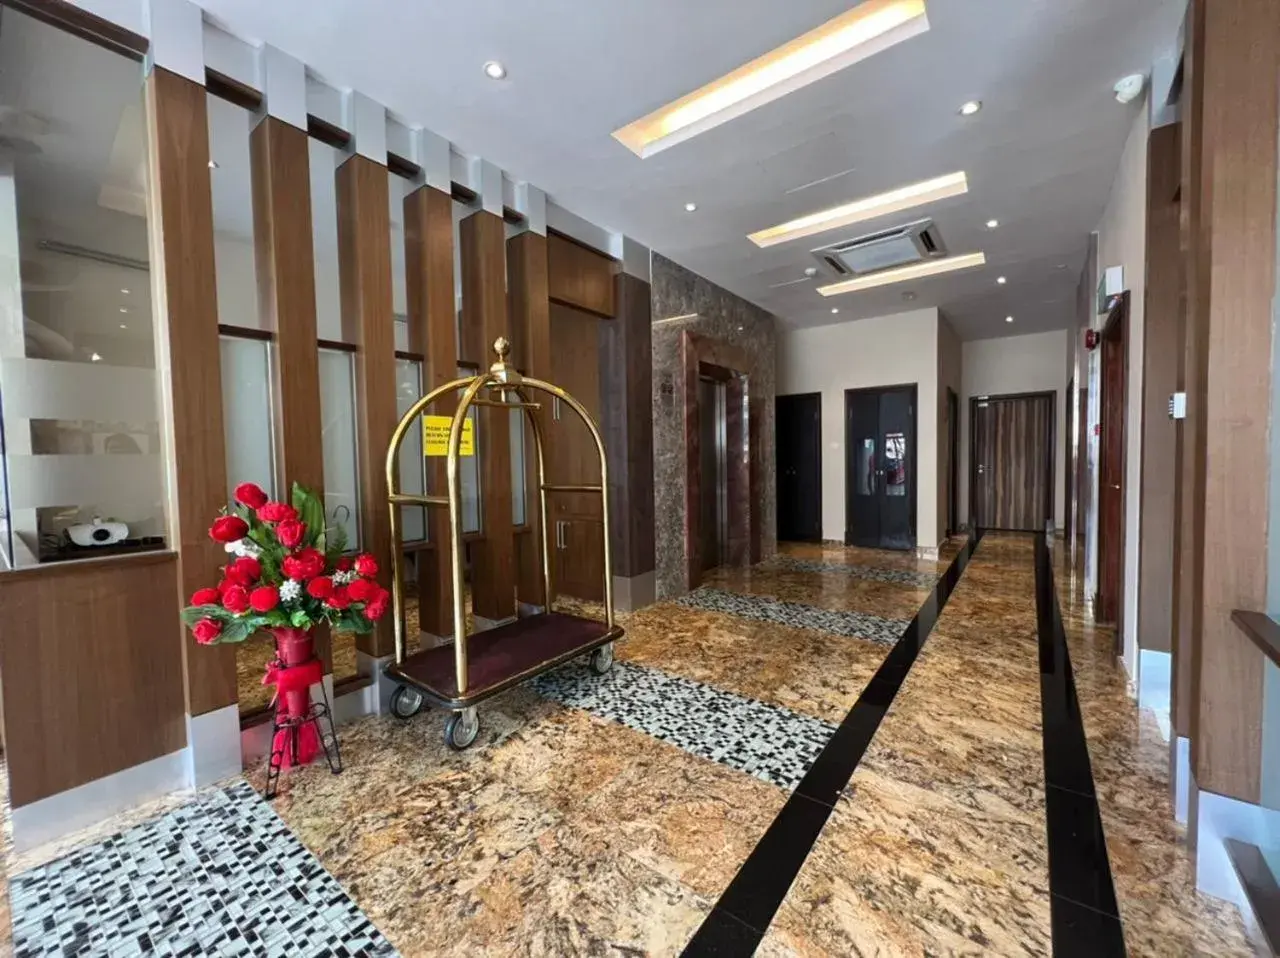 Lobby or reception in Nova Hotel